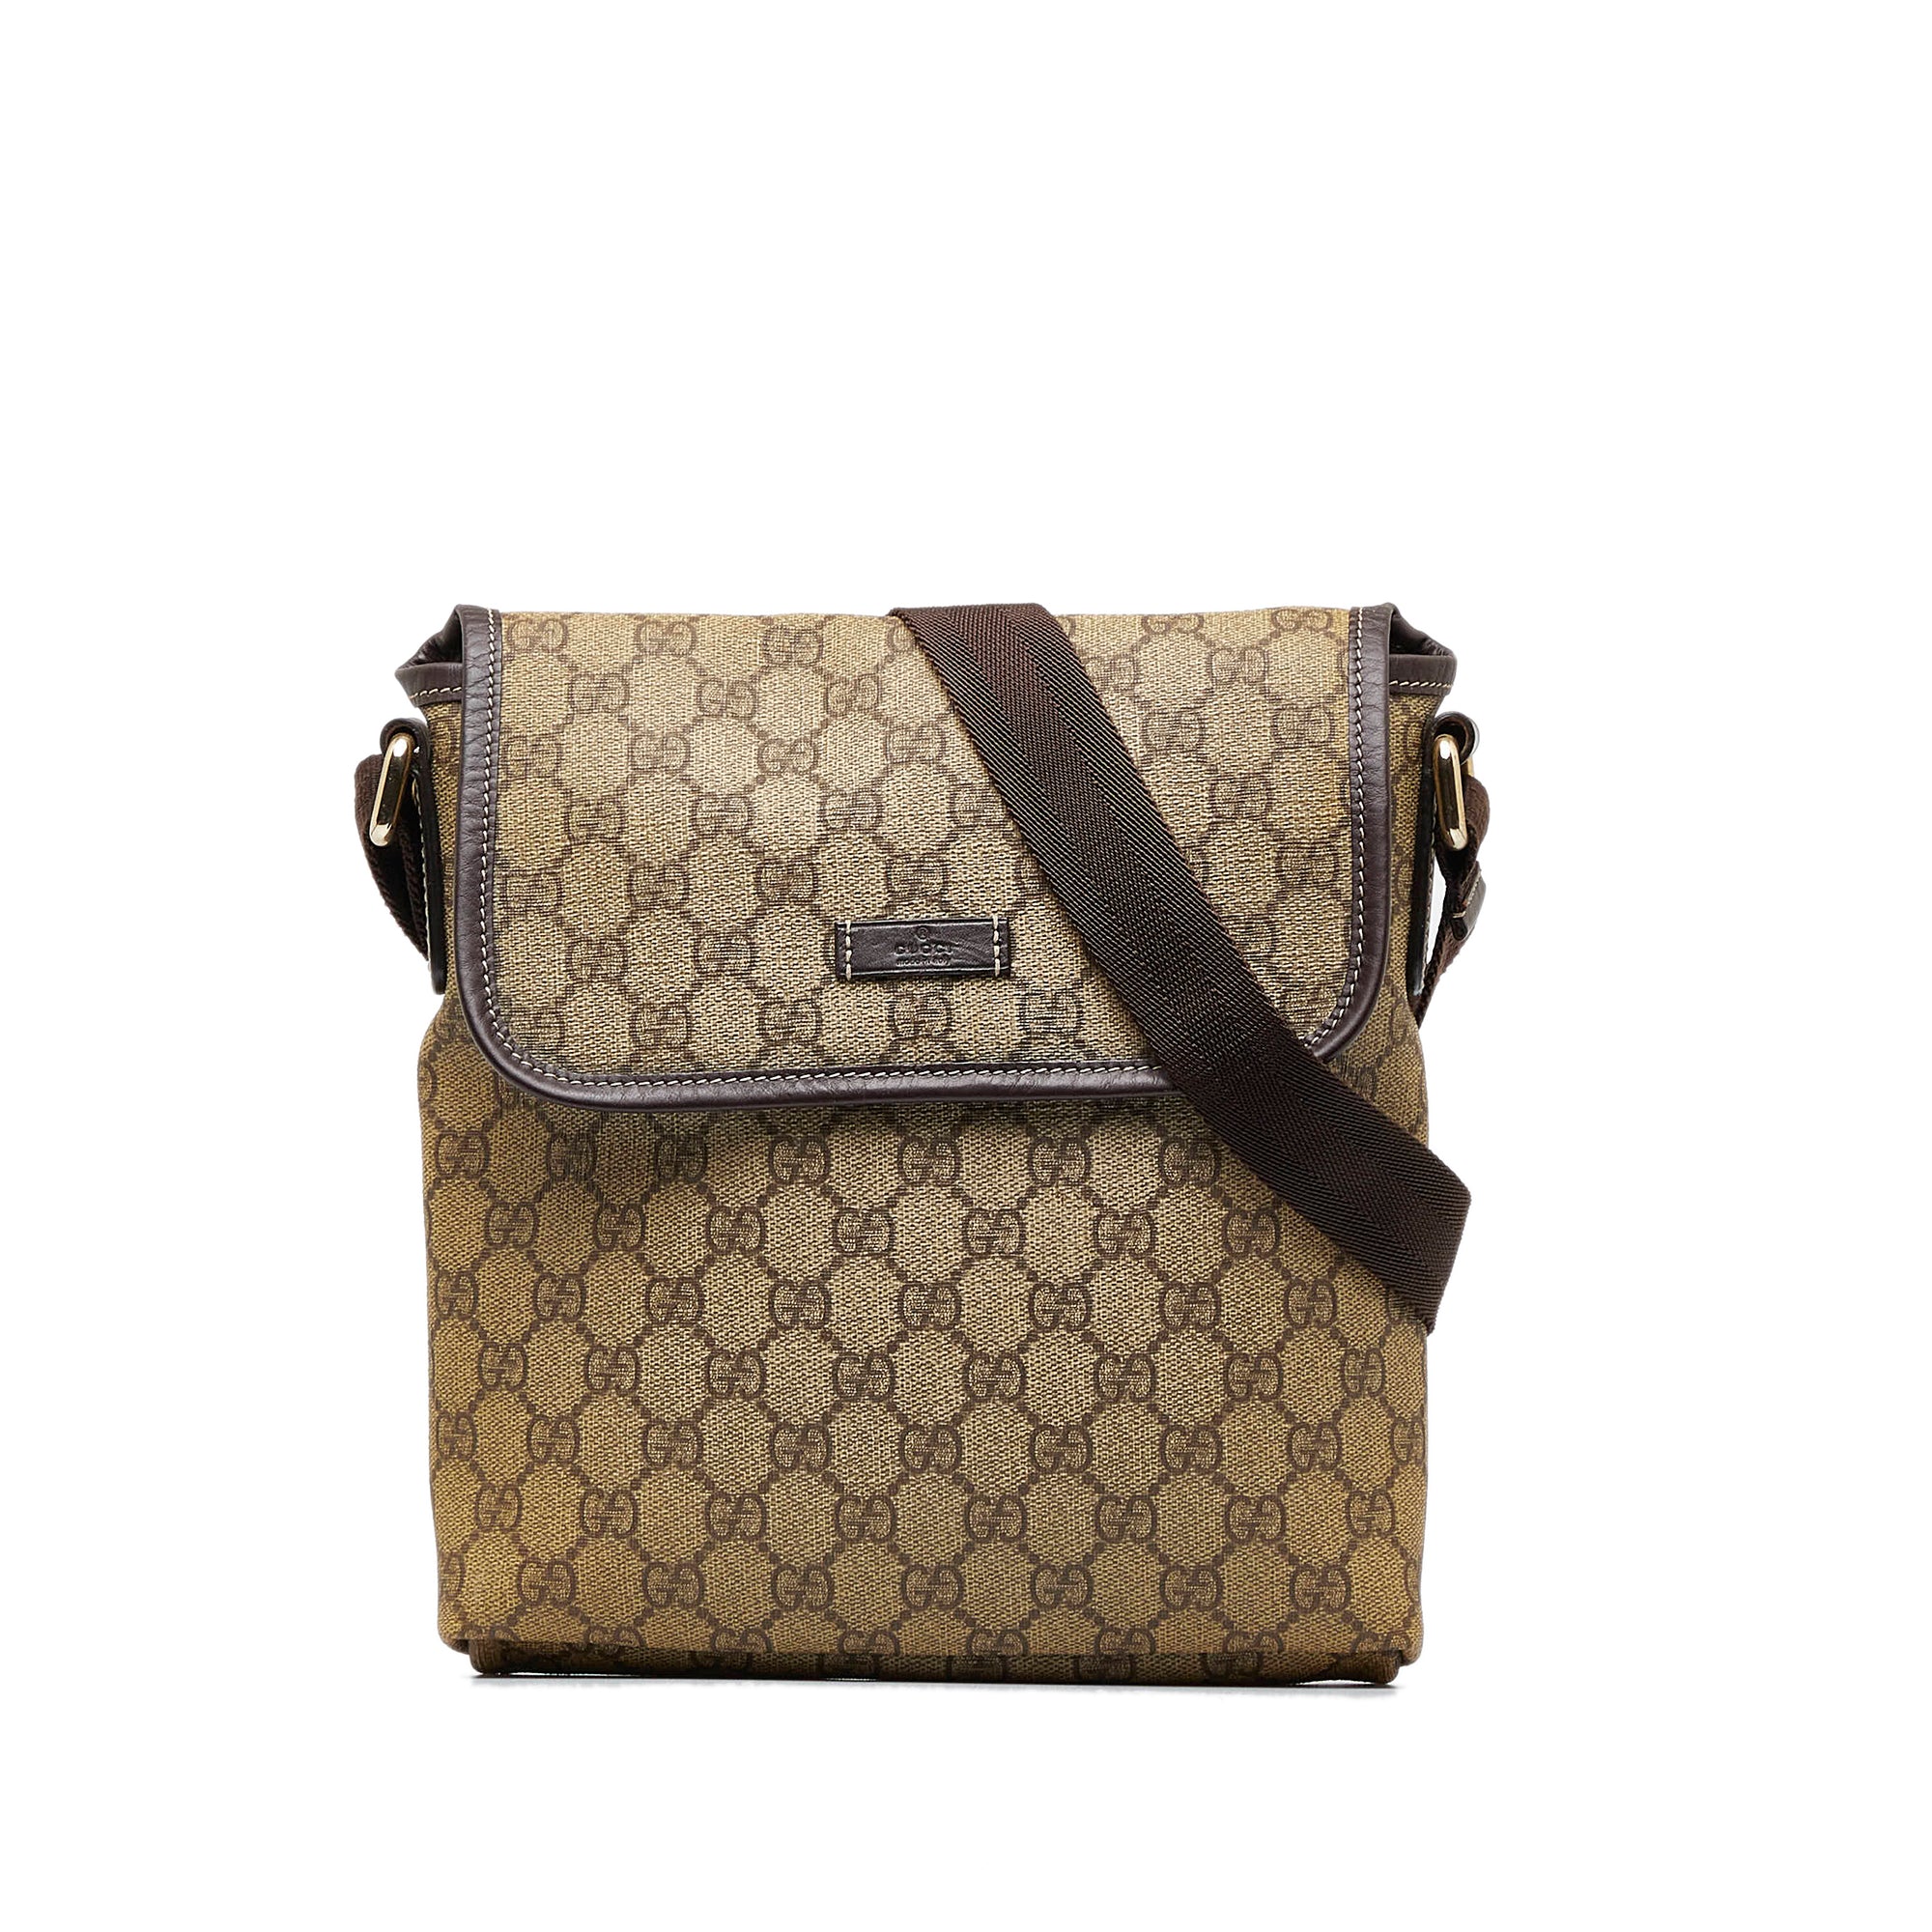 Gucci Gg Supreme Messenger Bag In Brown